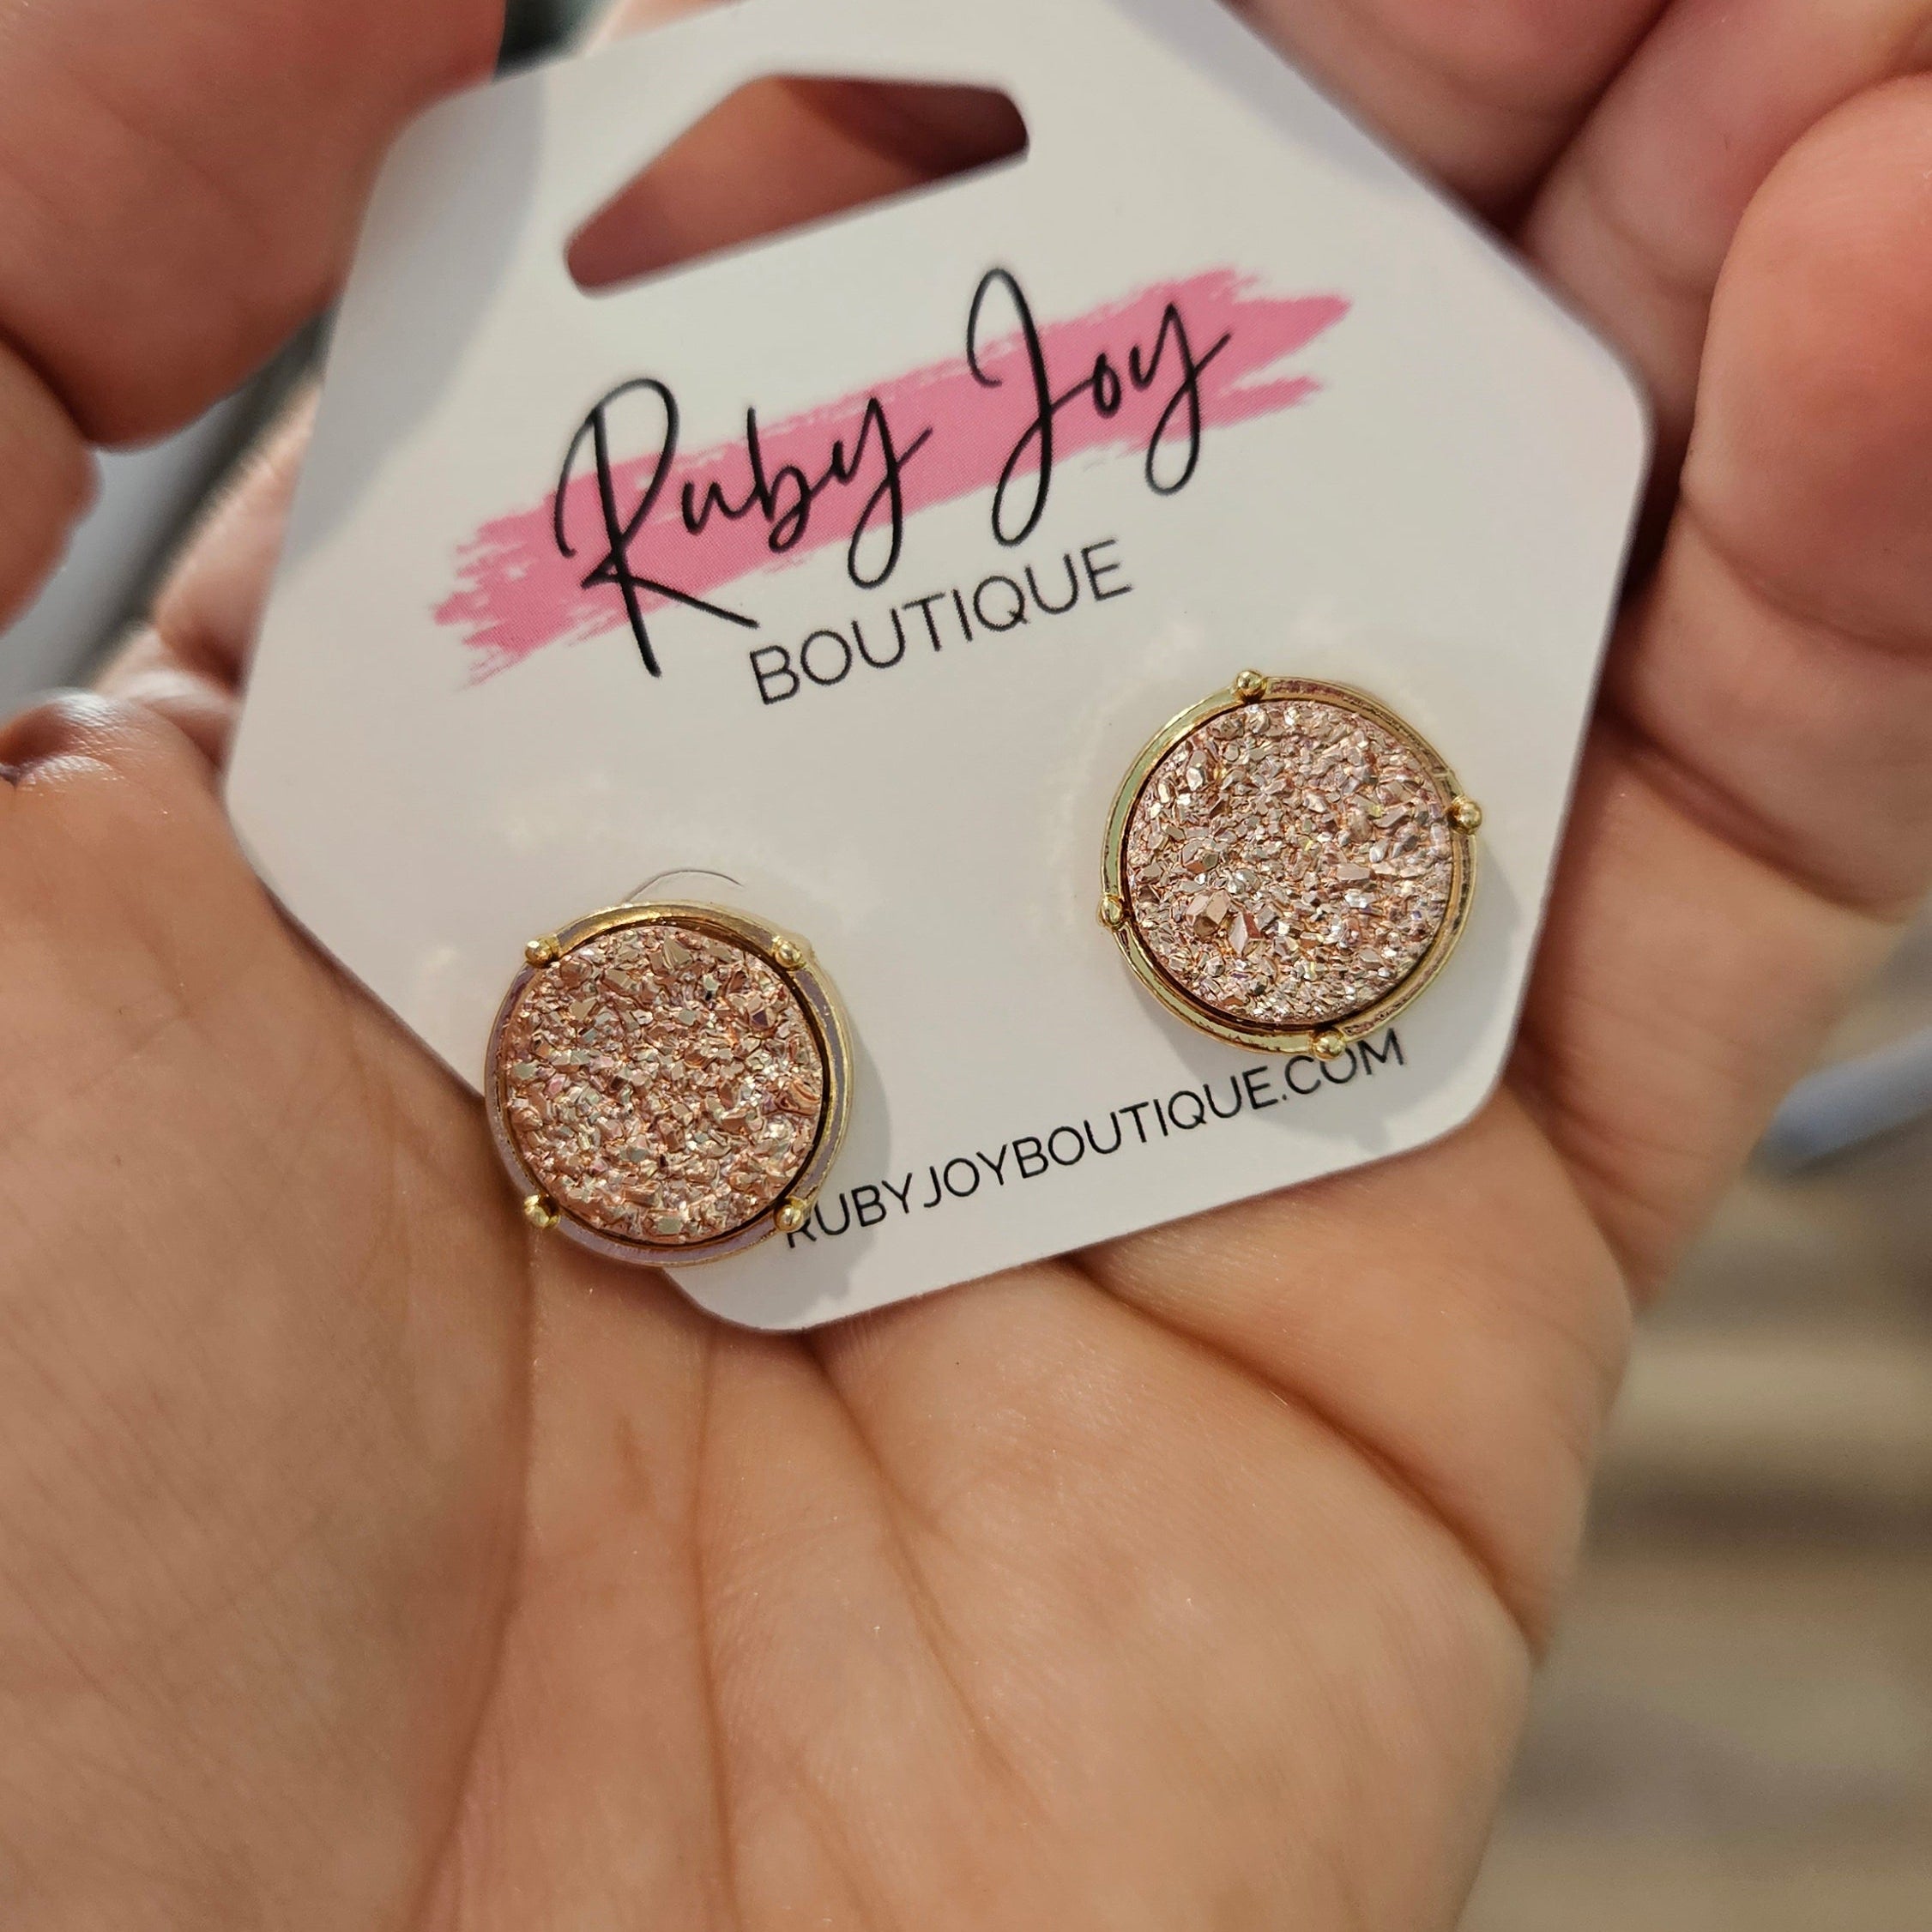 Shop Round Druzy Stud Earrings-Earrings at Ruby Joy Boutique, a Women's Clothing Store in Pickerington, Ohio